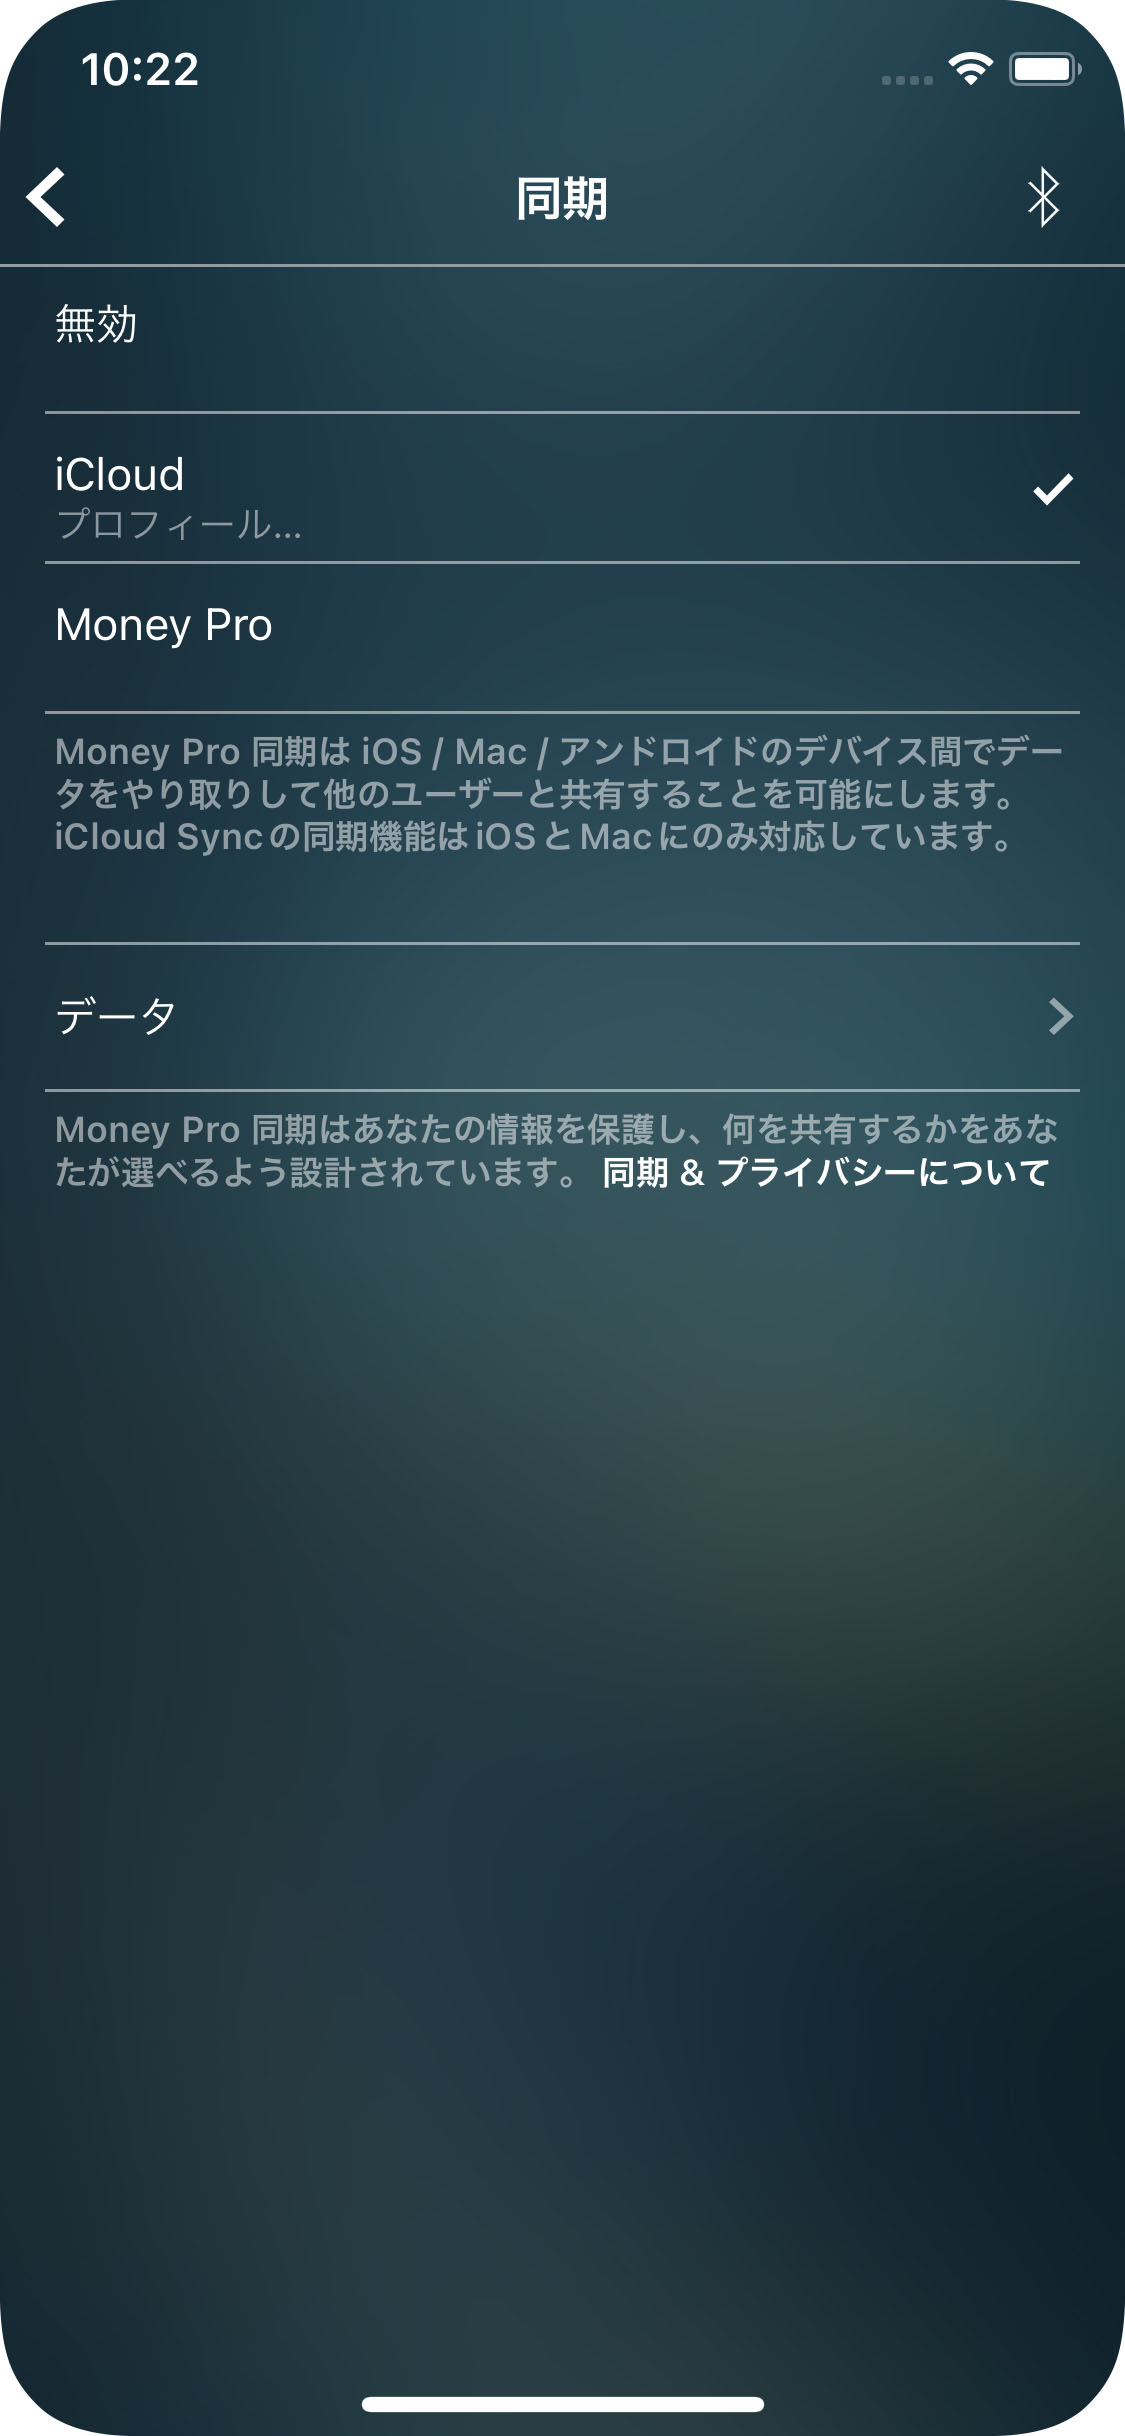 Money Pro - iCloud 同期 (iOS, Mac) - iPhone